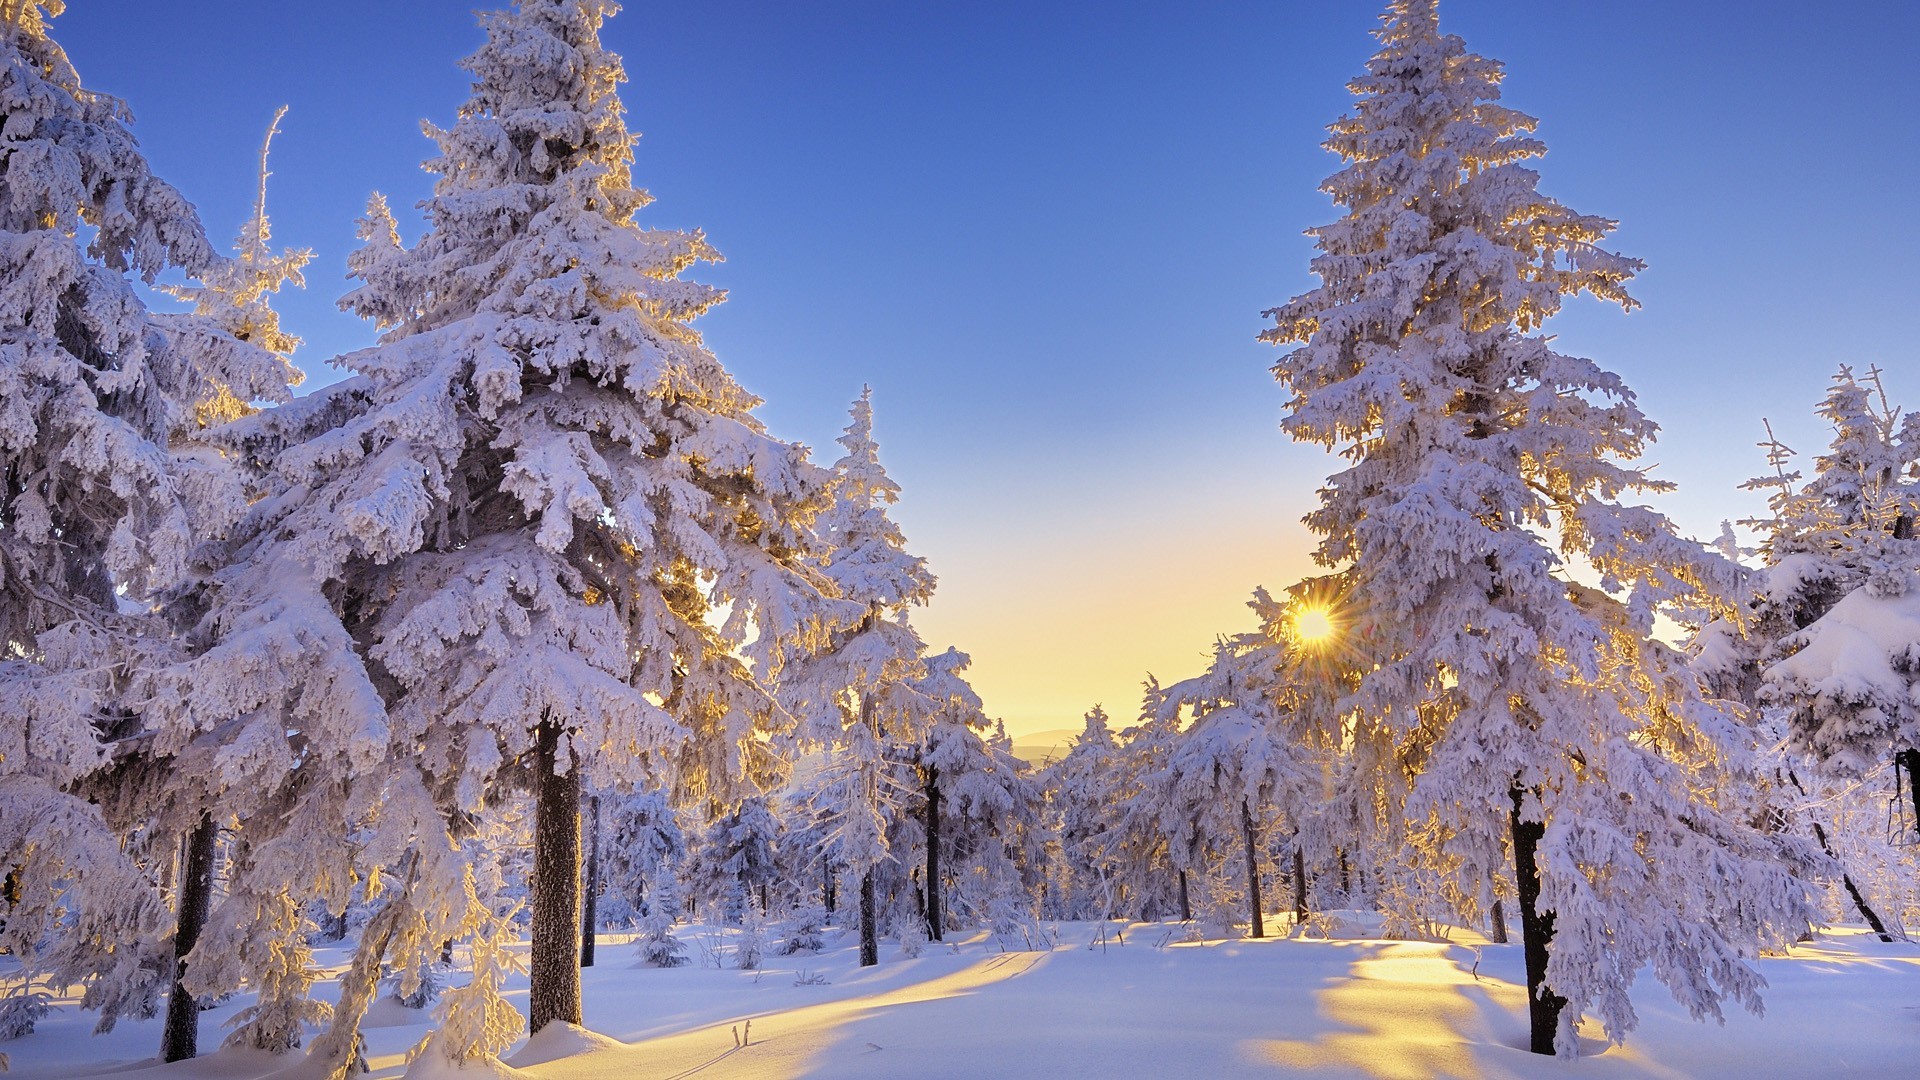 Winter Snow Wallpaper Winter, Snow, Trees, Germany - Winter Wonderland Desktop Background - HD Wallpaper 